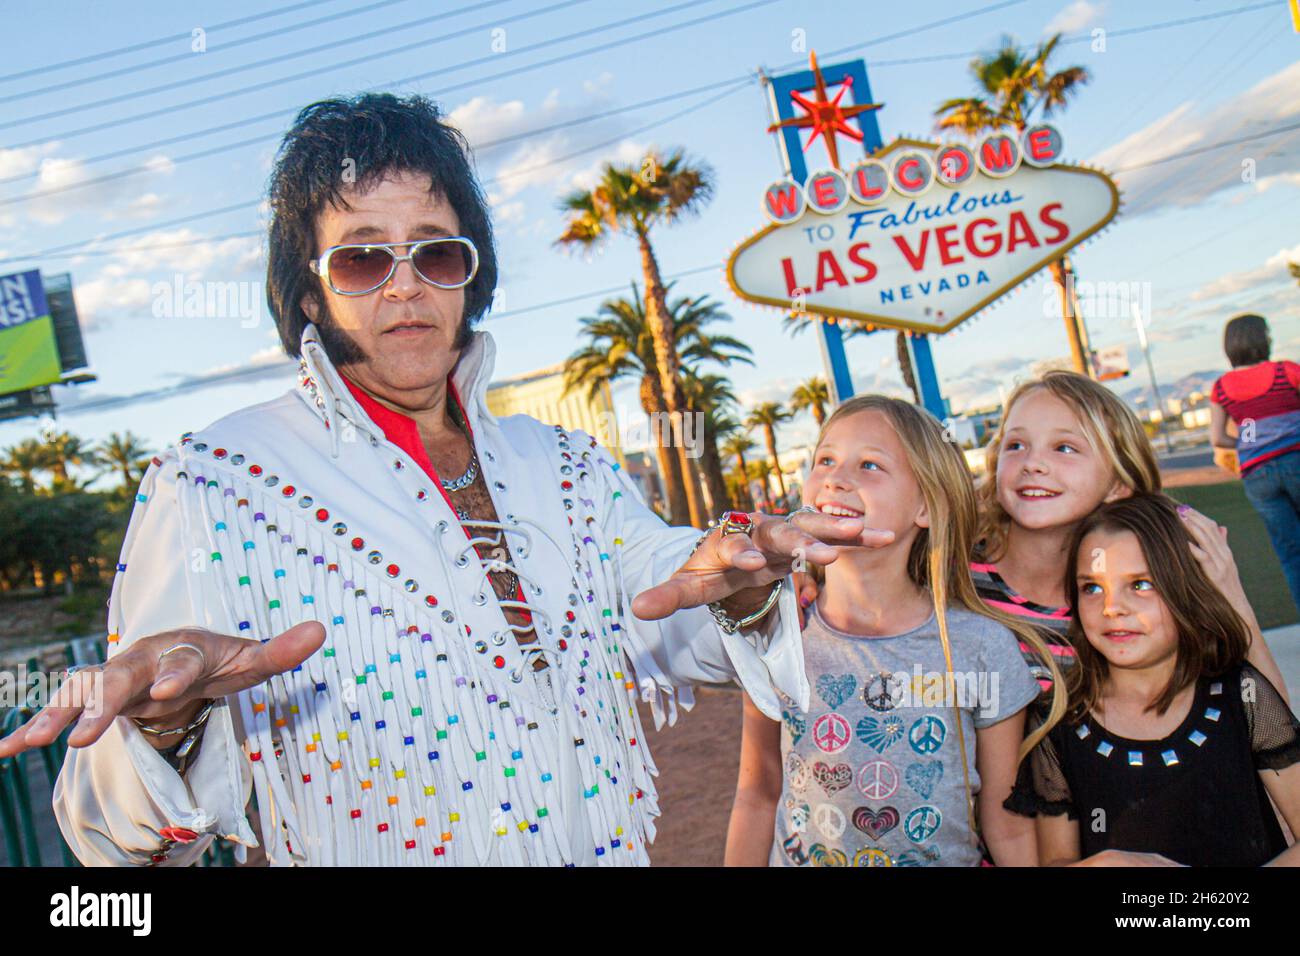 Las Vegas Nevada,The Strip,Benvenuti al favoloso Las Vegas segno storico uomo maschio, Elvis Presley impersonatore celebrità look-simili ragazze bambini Foto Stock